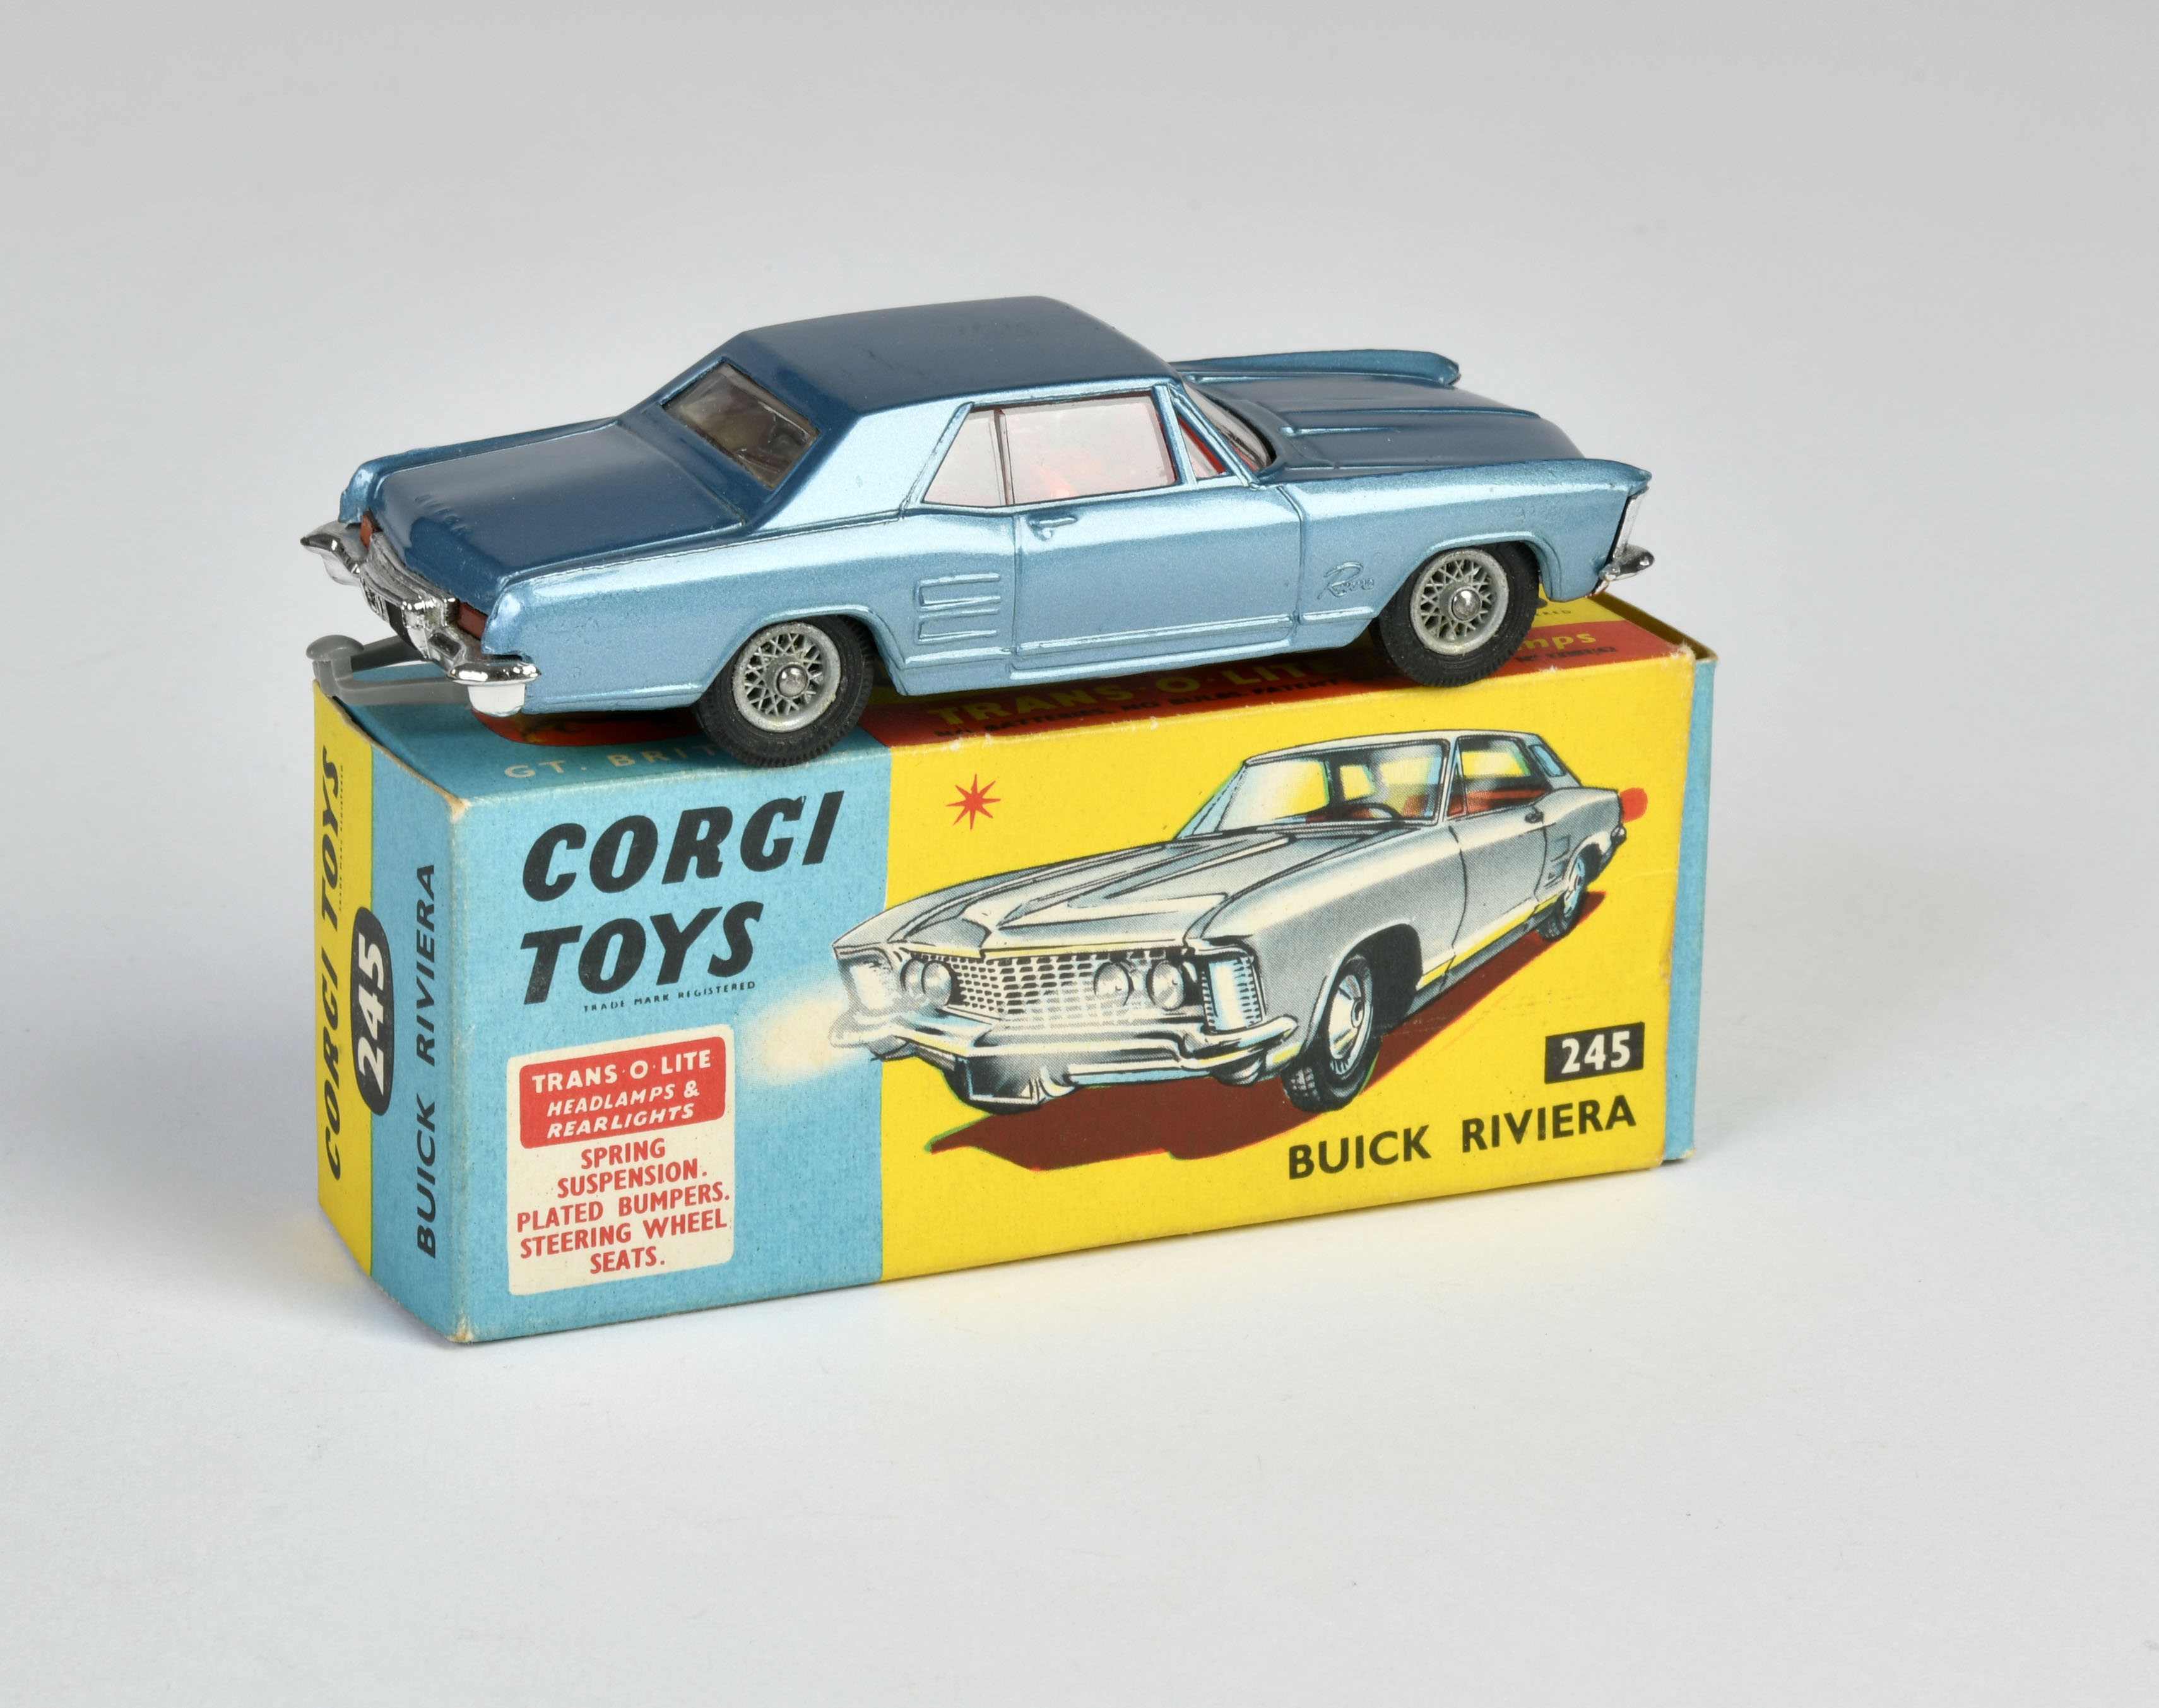 Corgi Toys, 245 Buick Riviera, blue, England, 1:43, diecast, box C 1, C 1 - Image 2 of 2